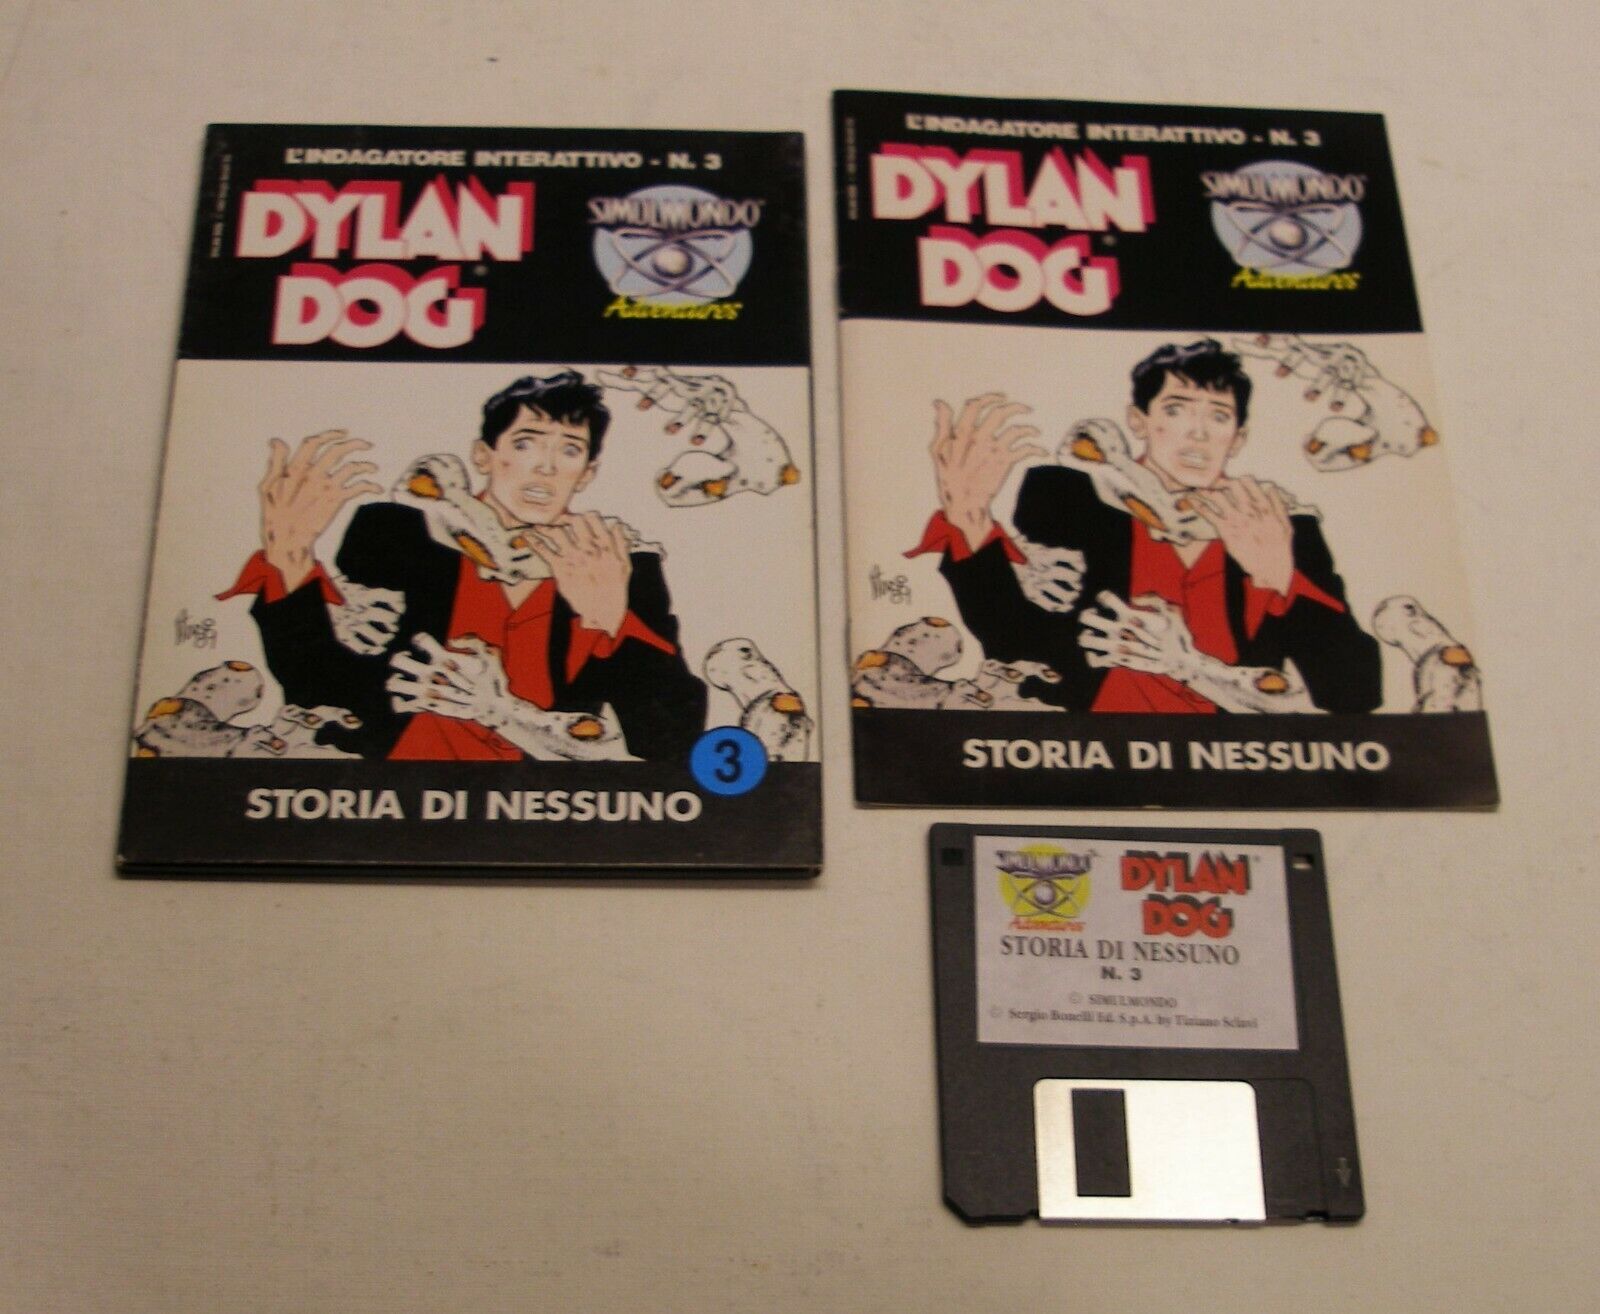 EXTREMELY RARE: Dylan Dog 03 Storia Di Nessuno by Simulmondo for Commodore Amiga